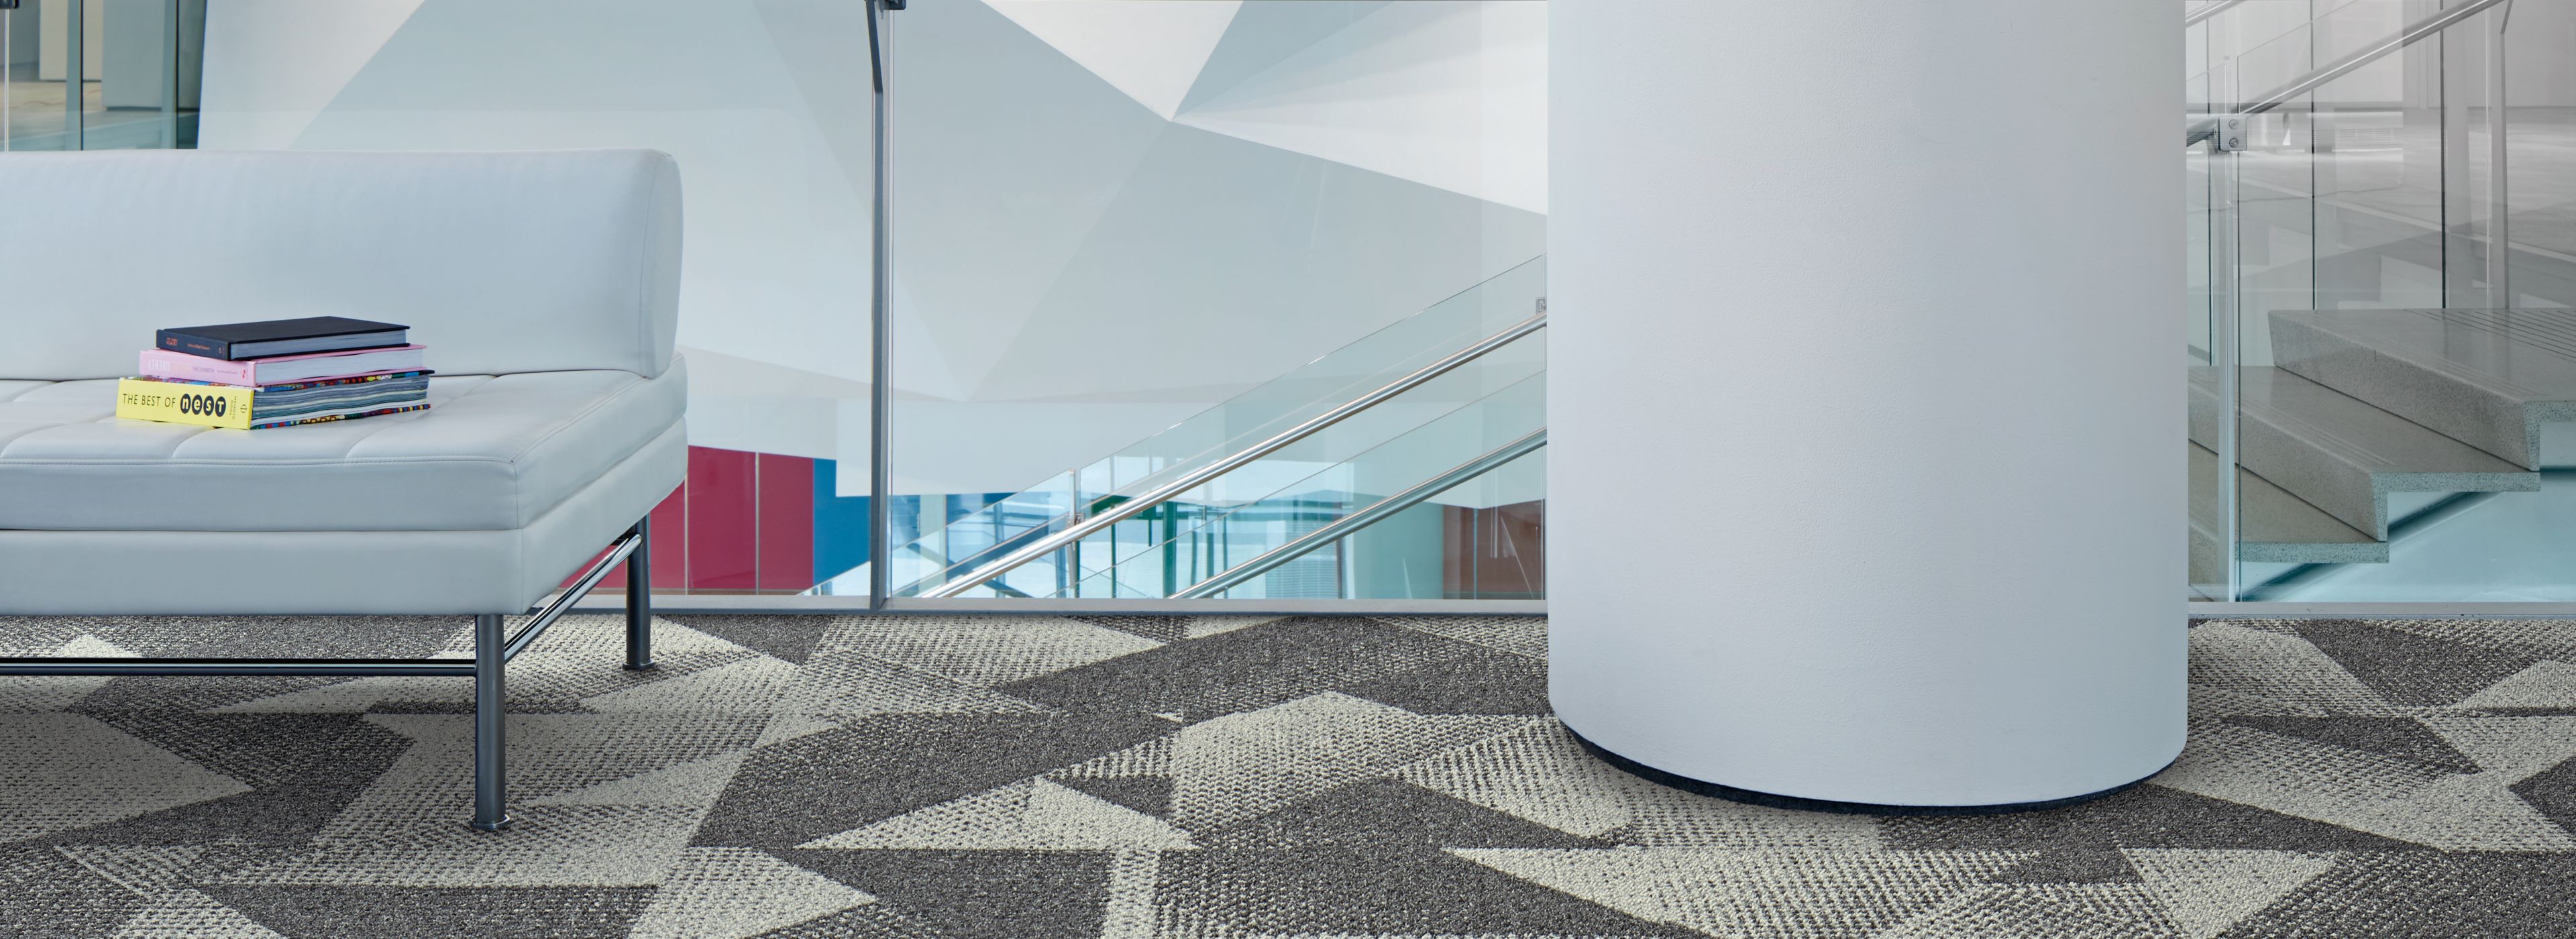 Interface Upward Bound carpet tile in office common area numéro d’image 1